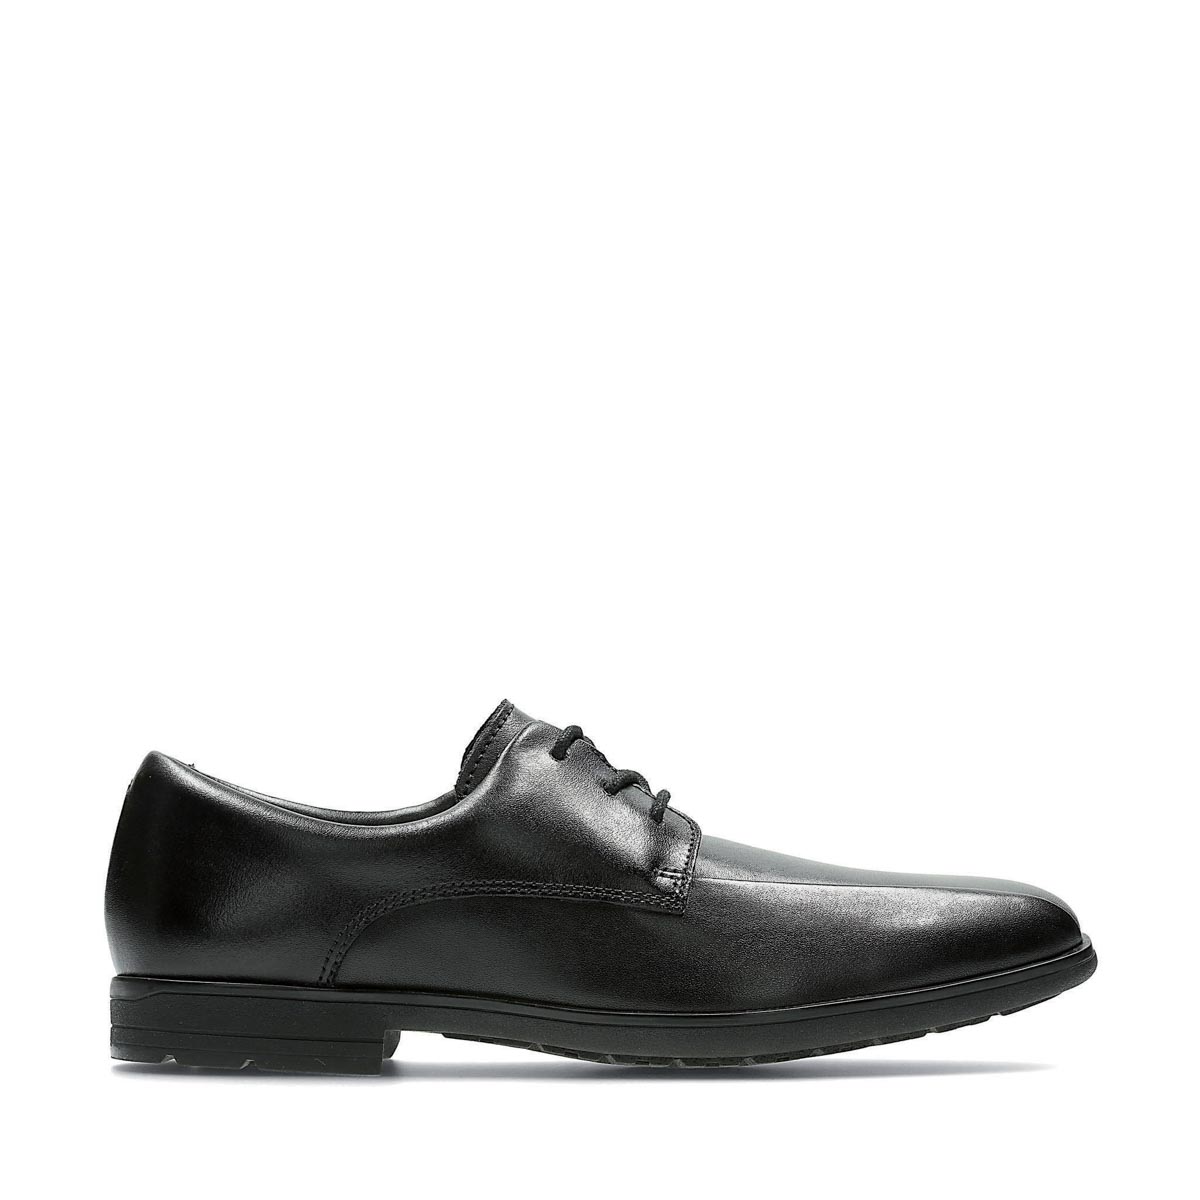 Clarks Willis Lad Bl G Fit Black leather school shoes